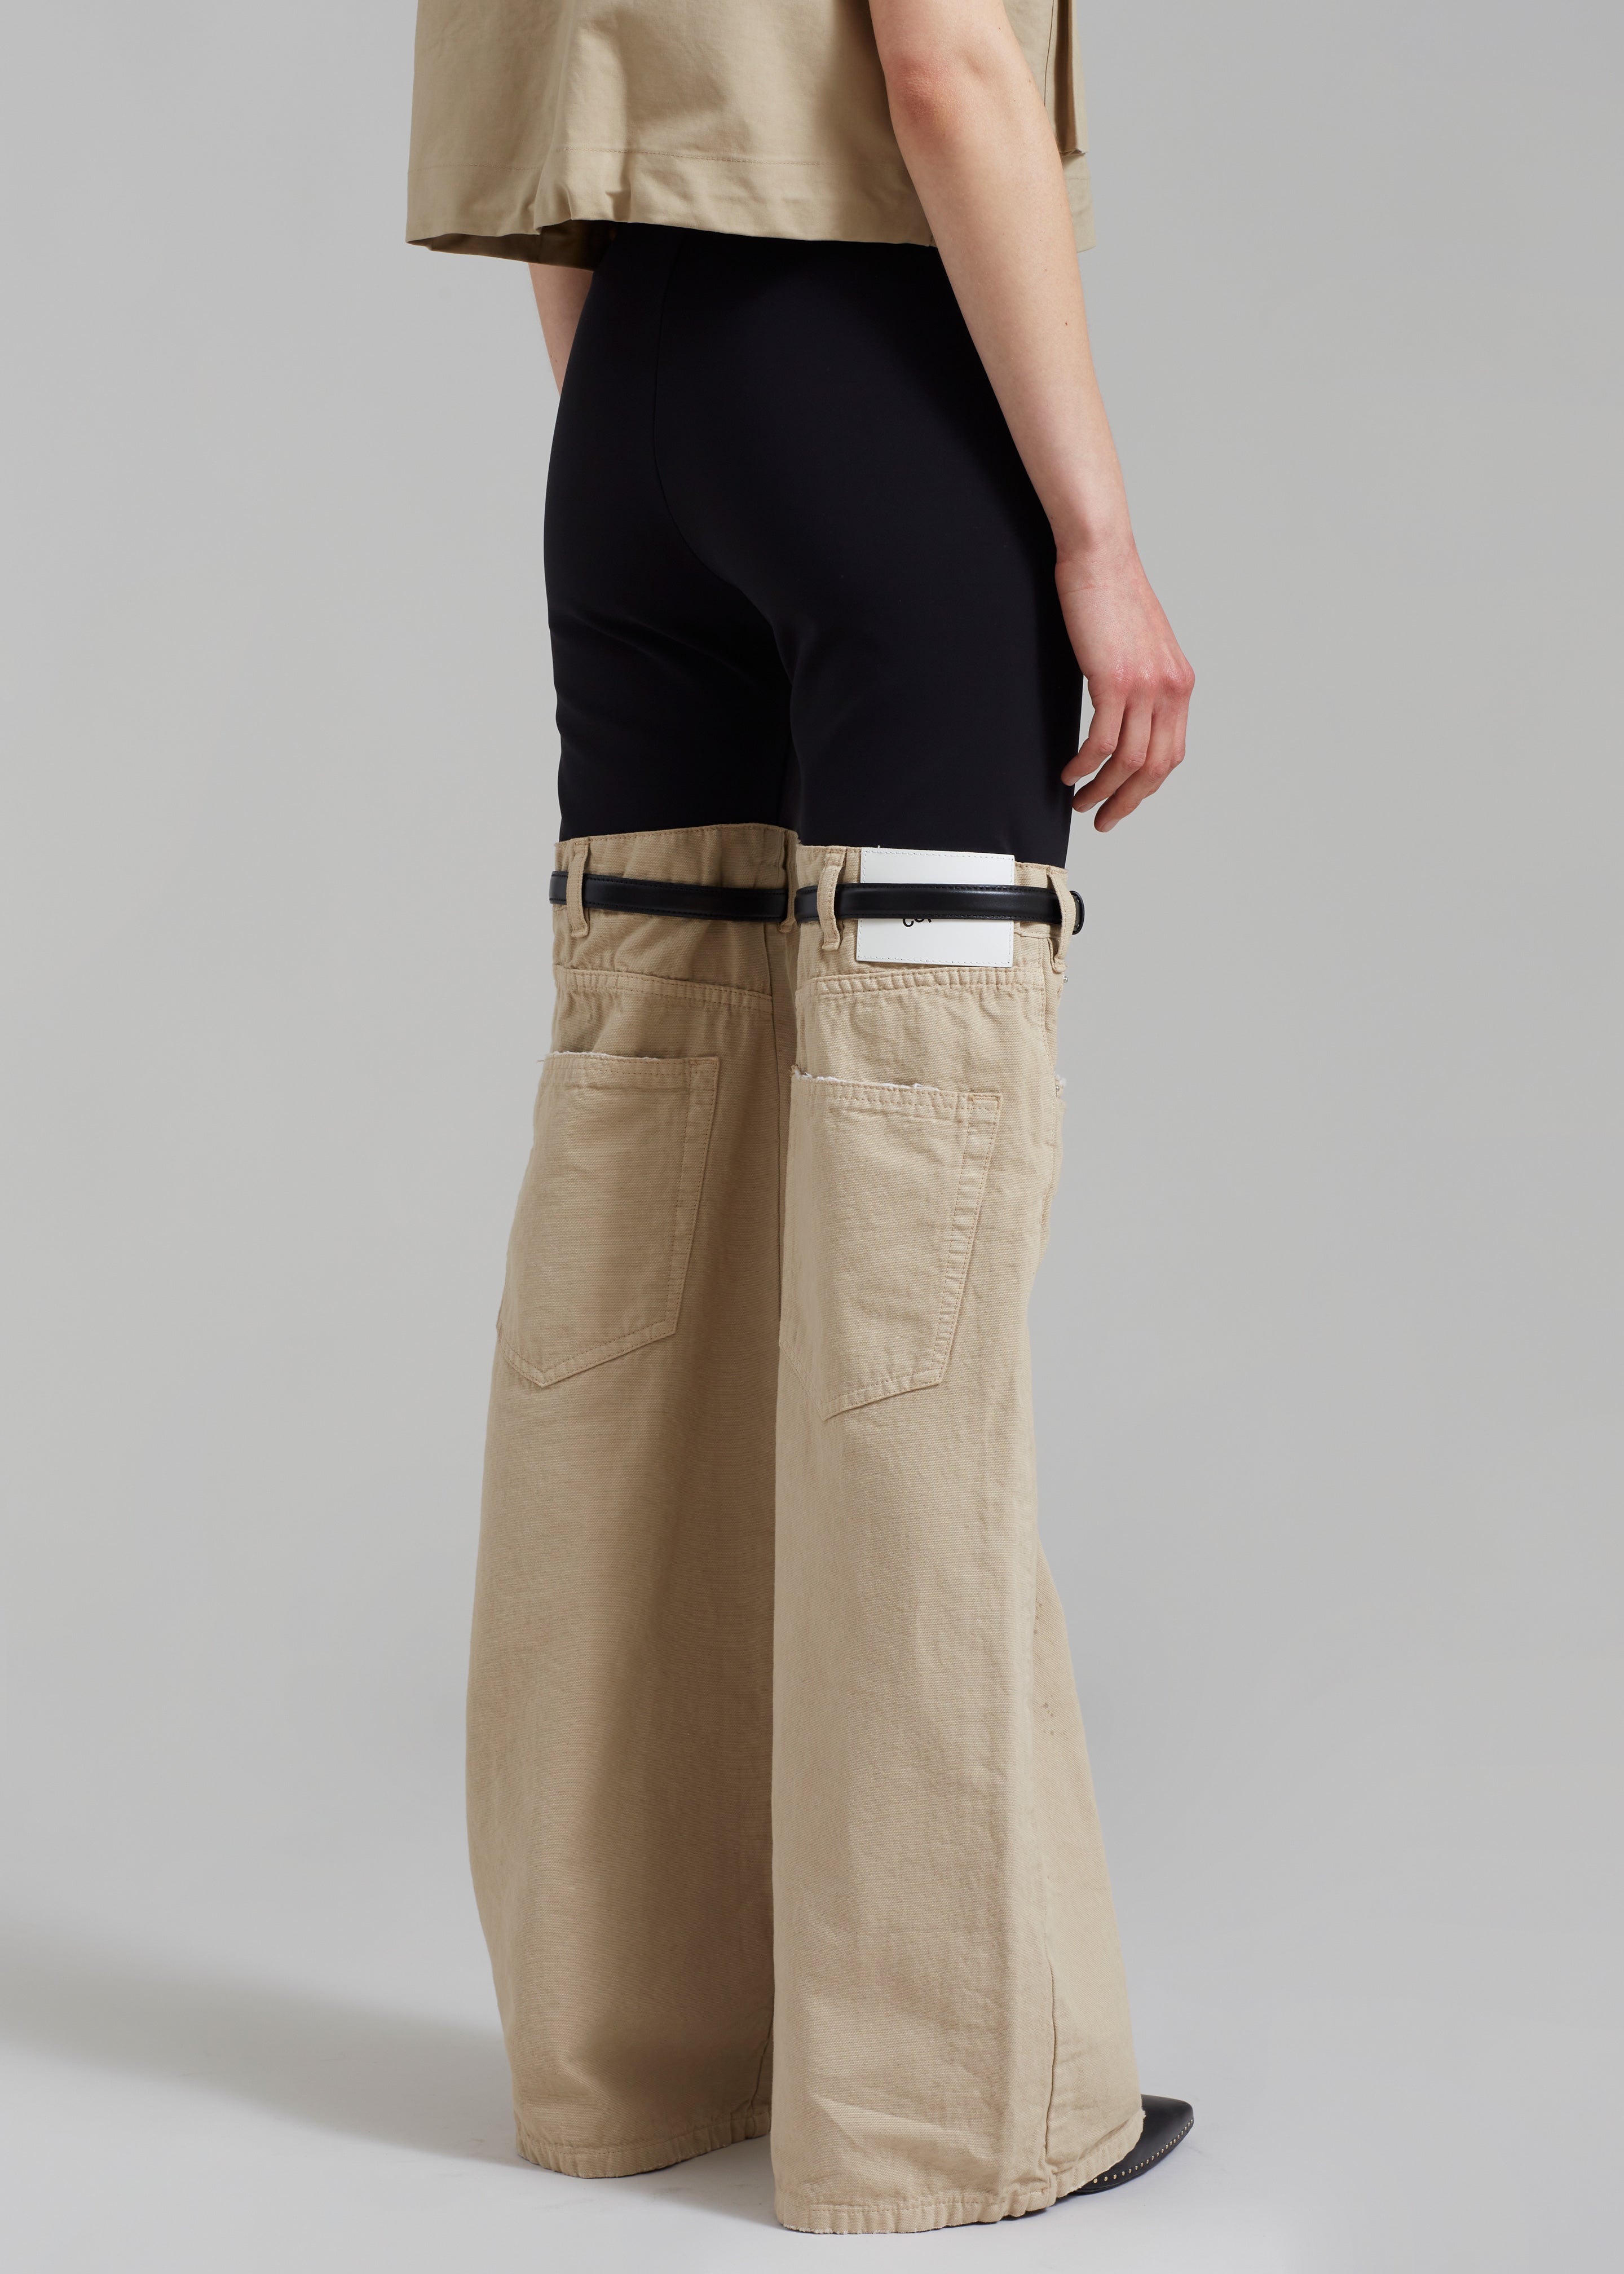 Coperni Hybrid Denim Trousers - Black/Beige - 7